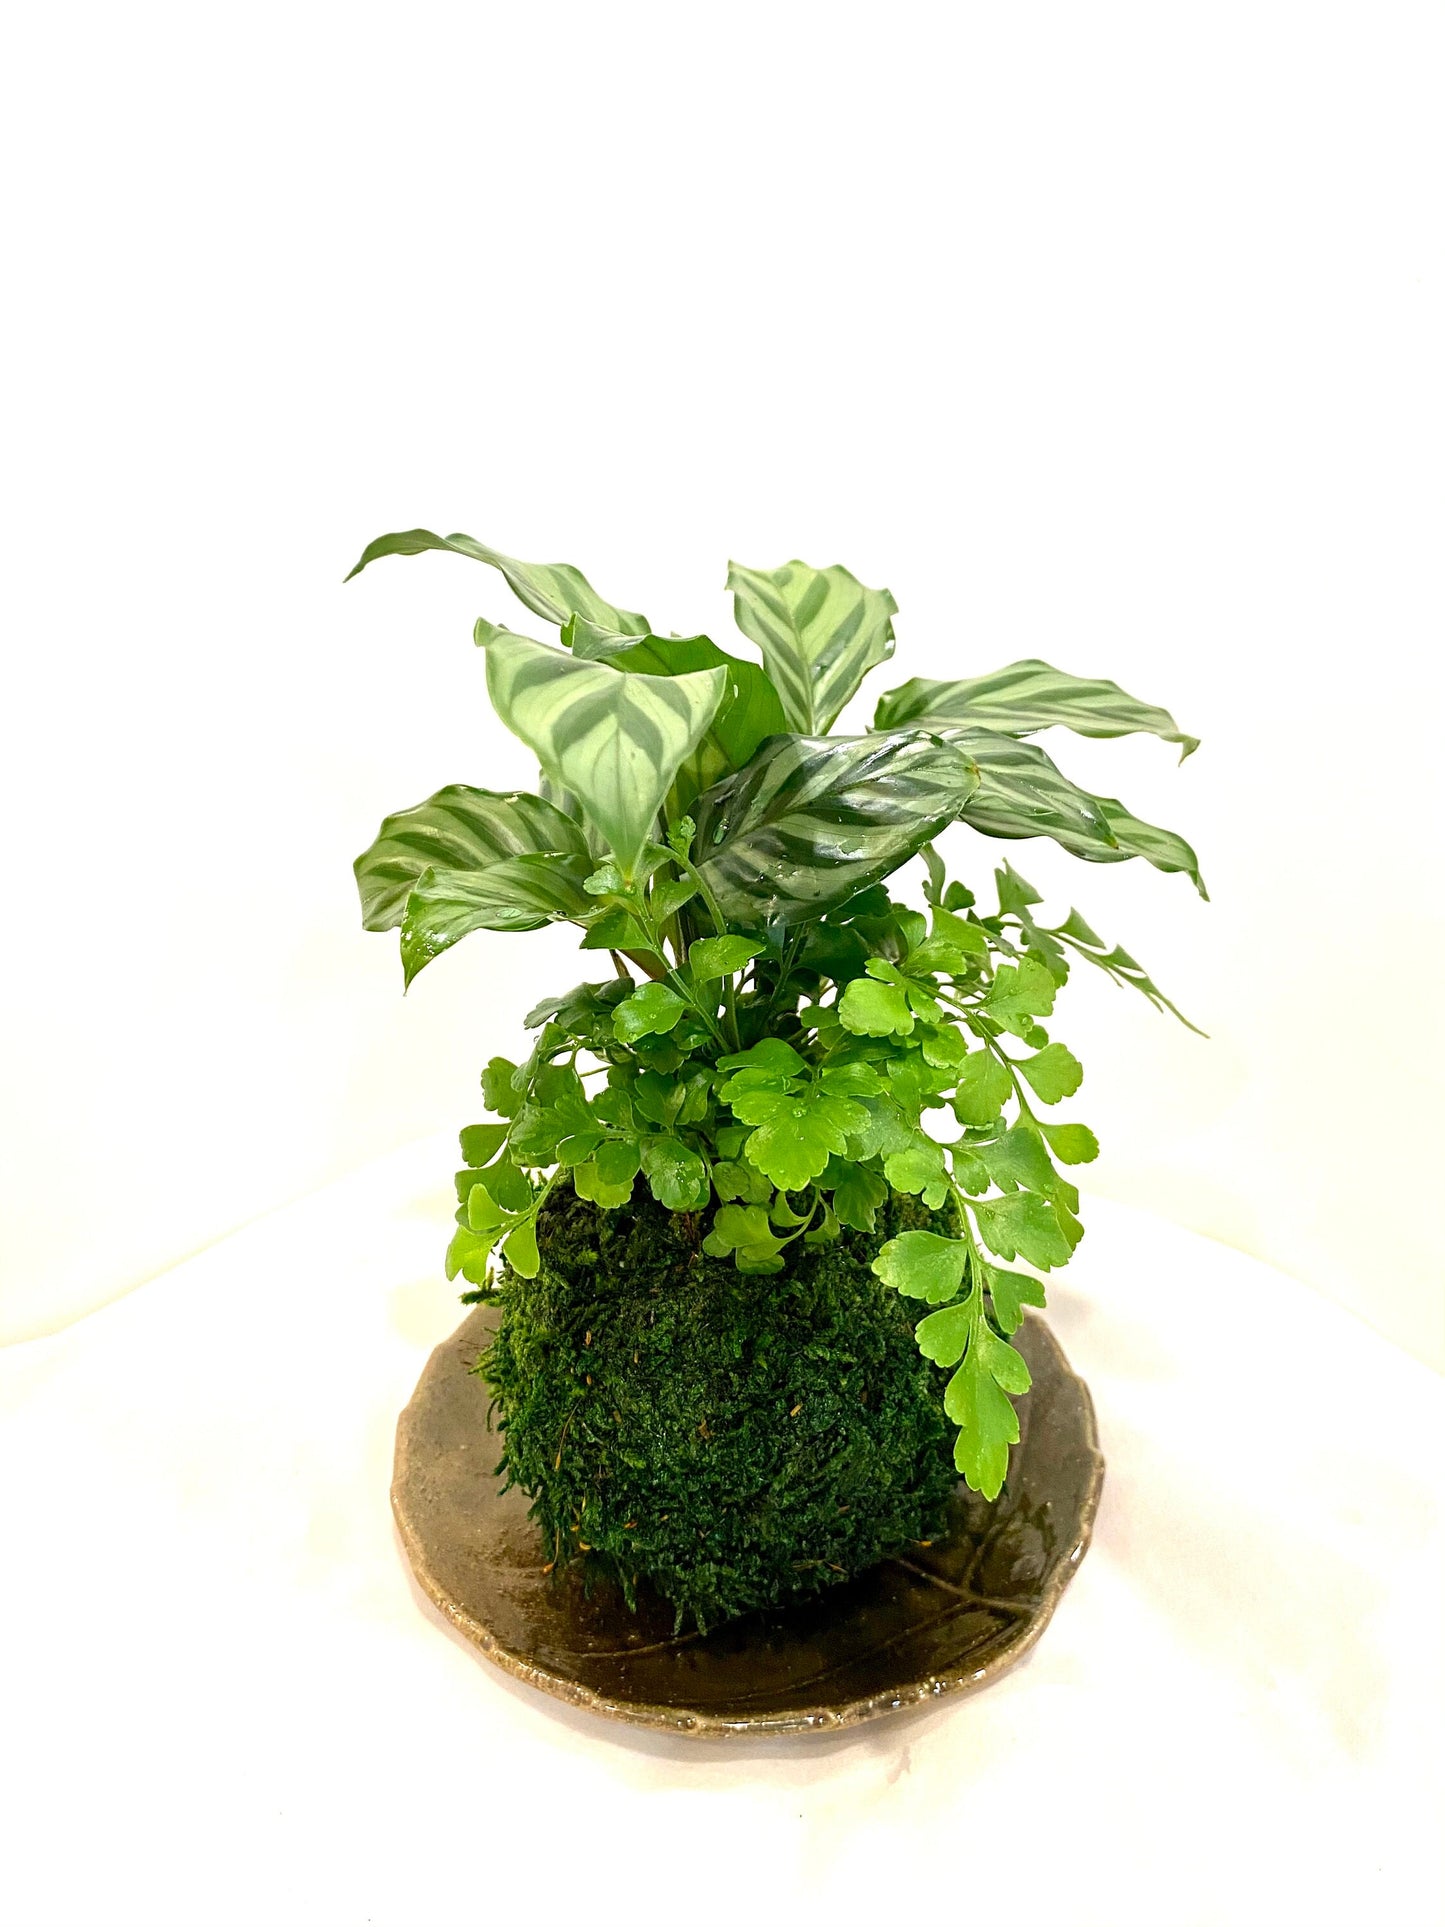 Calathea and Austral Gem Fern Combo Kokedama - Bonsai Moss ball - Japanese house plant decoration